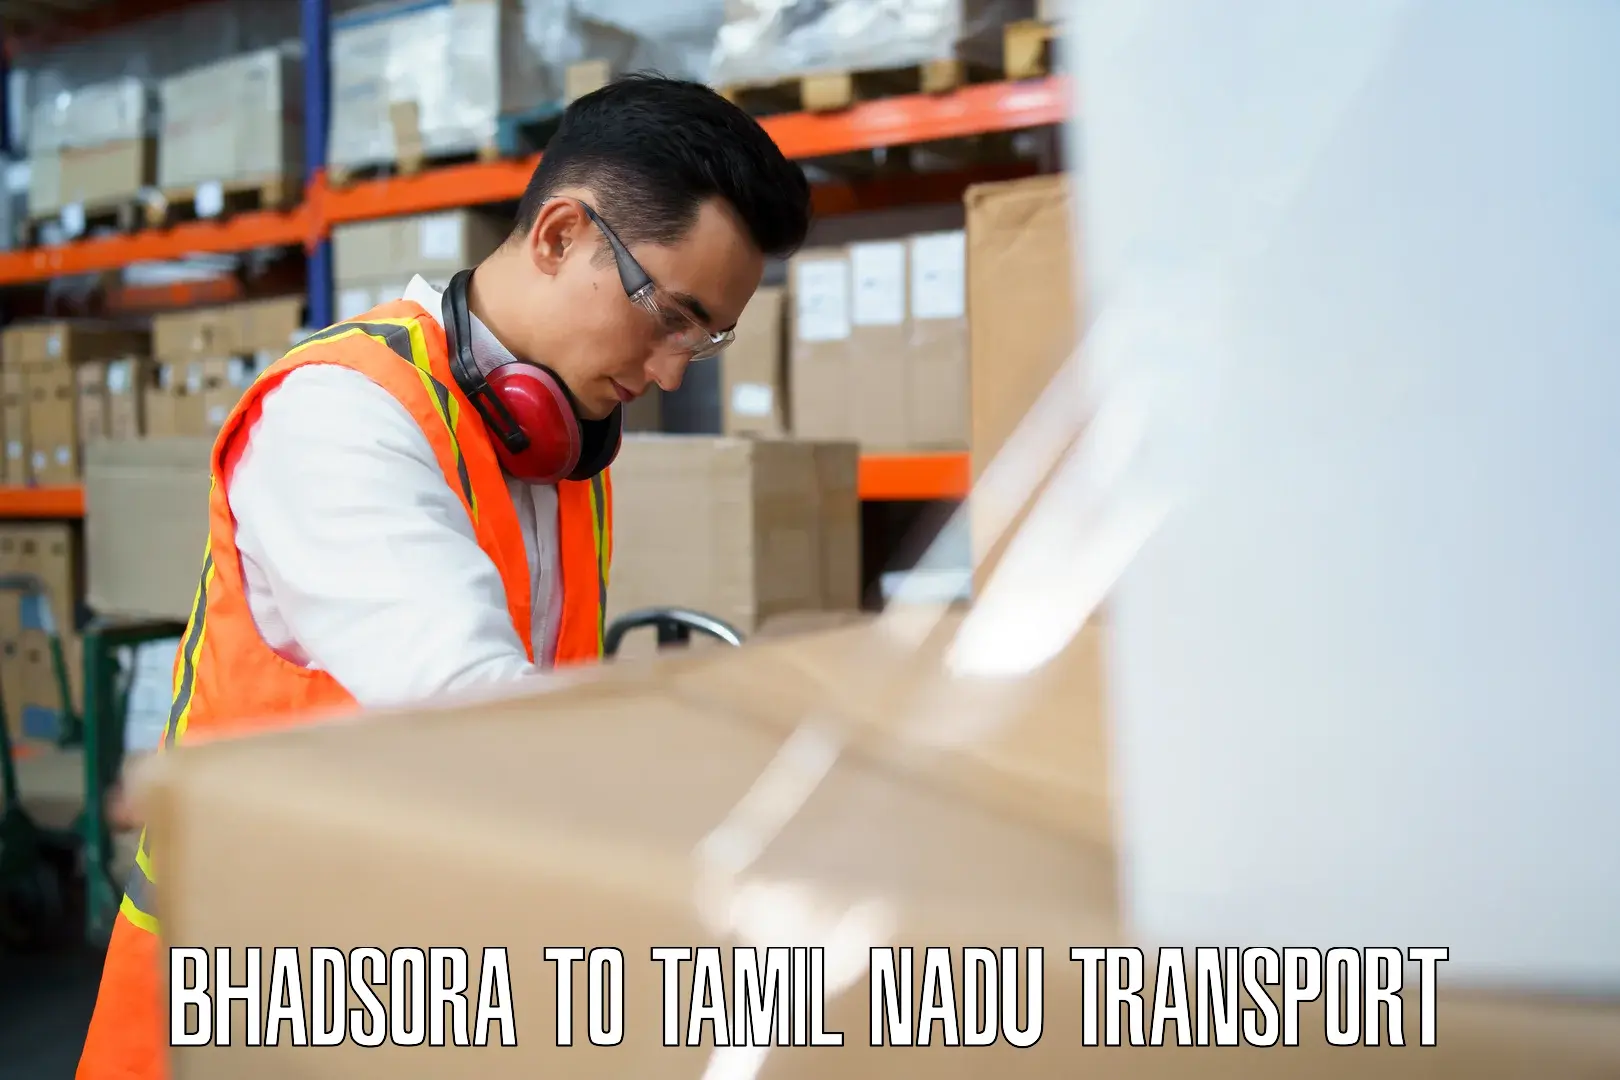 Shipping partner Bhadsora to Tamil Nadu